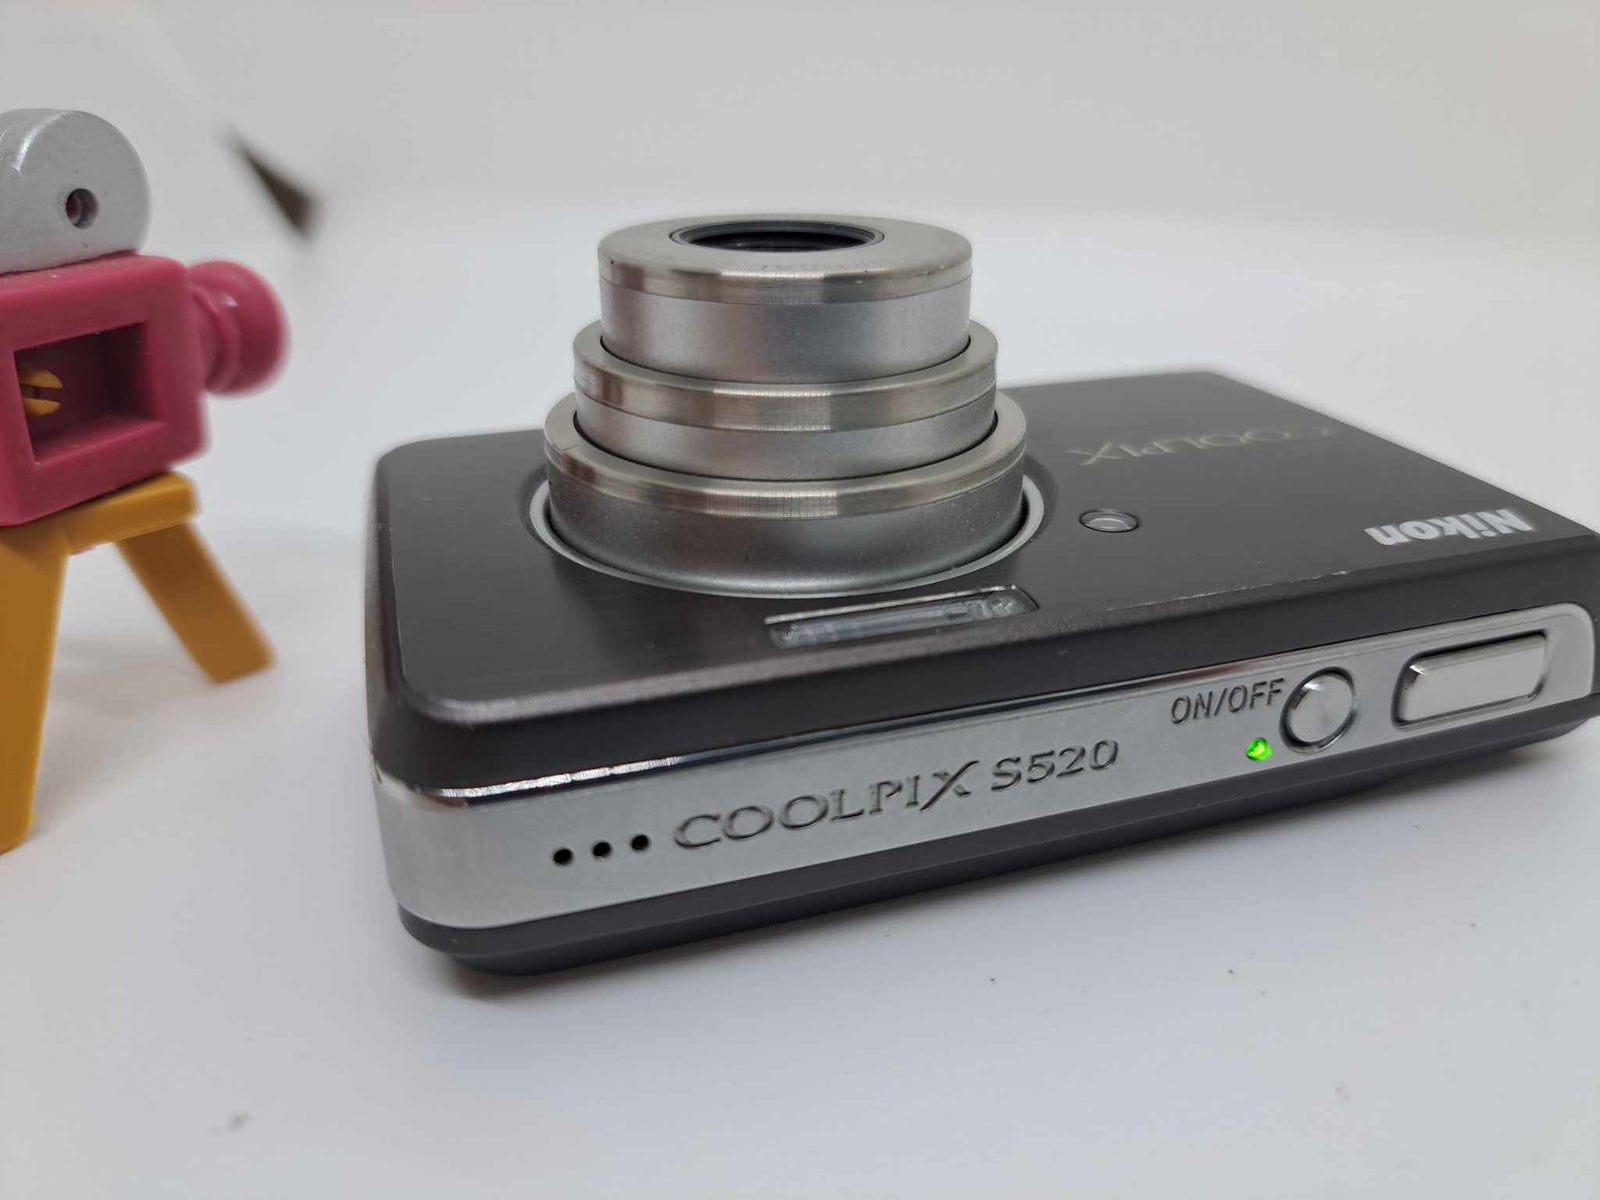 Nikon Coolpix S520, 8,1 megapixels, 3 x optisk zoom